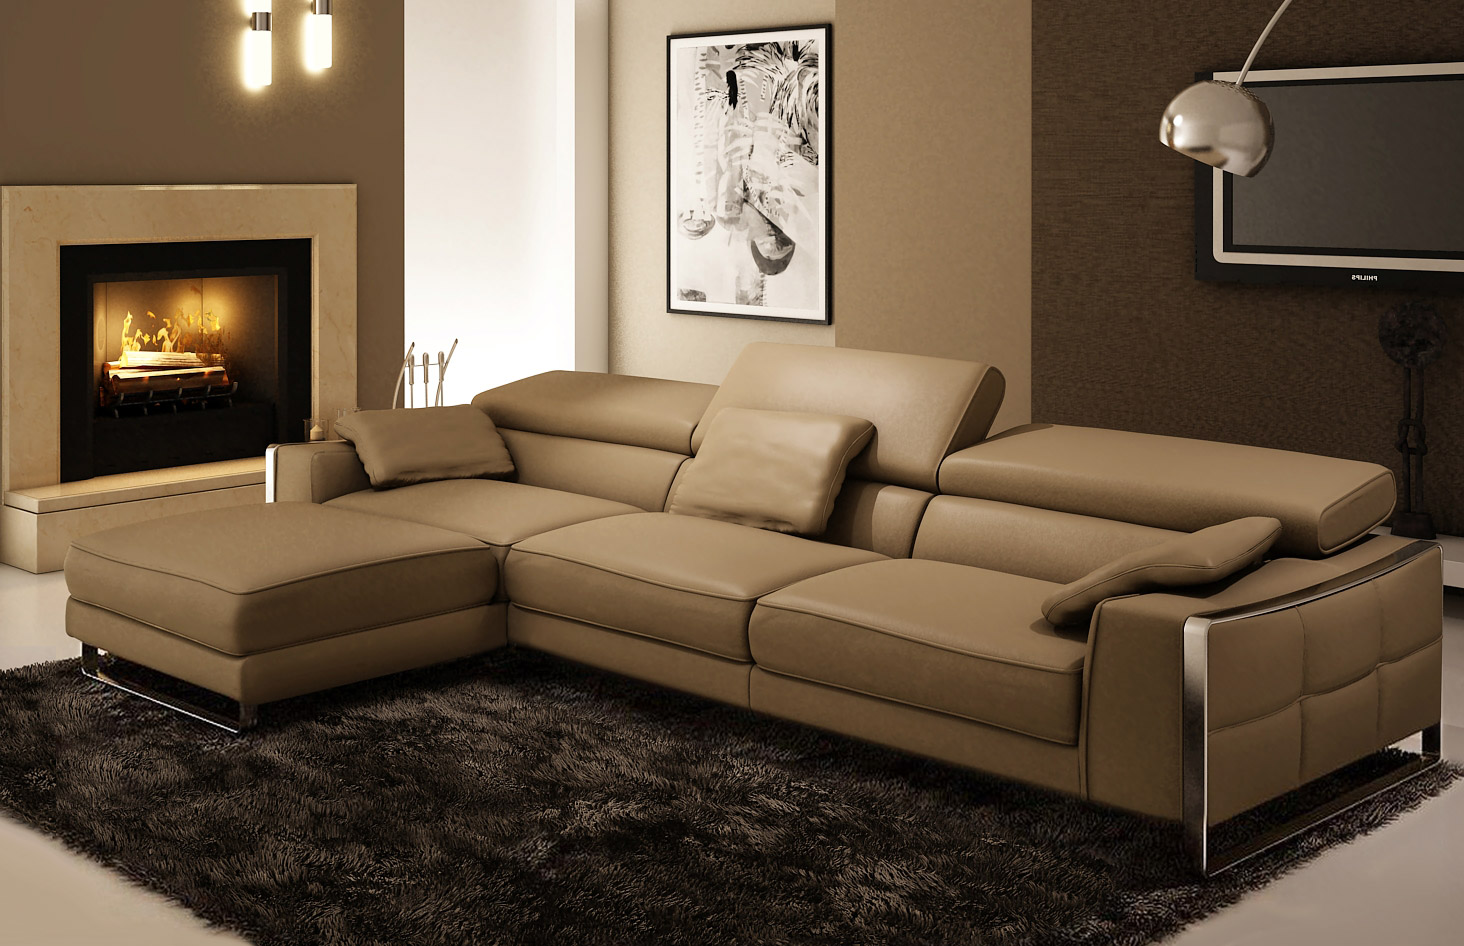 Corner sofa of light brown leather